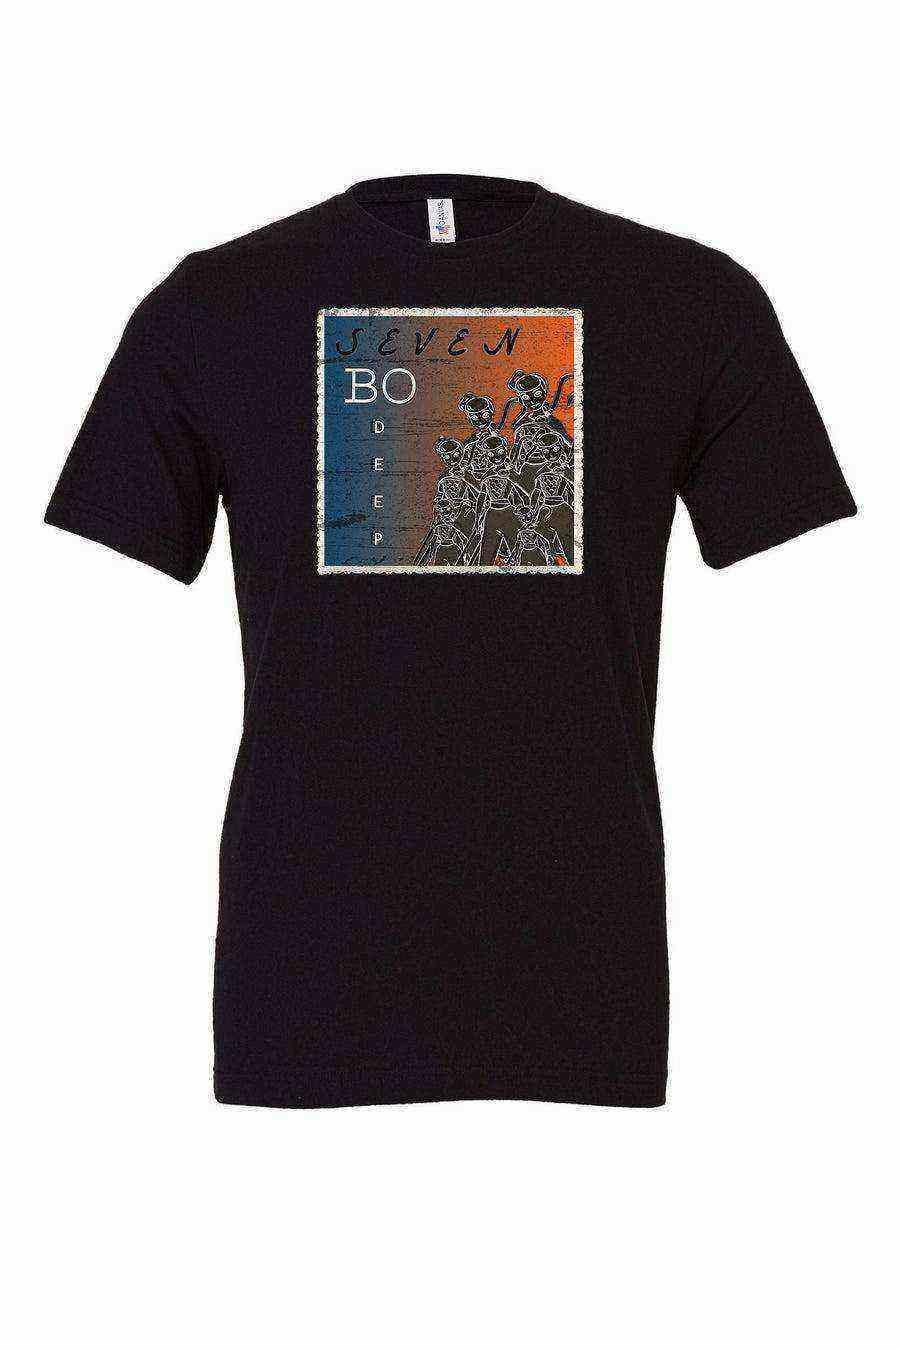 Youth | Seven Bo Deep Concert Tee | Bo Peep Grunge Album Shirt - Dylan's Tees